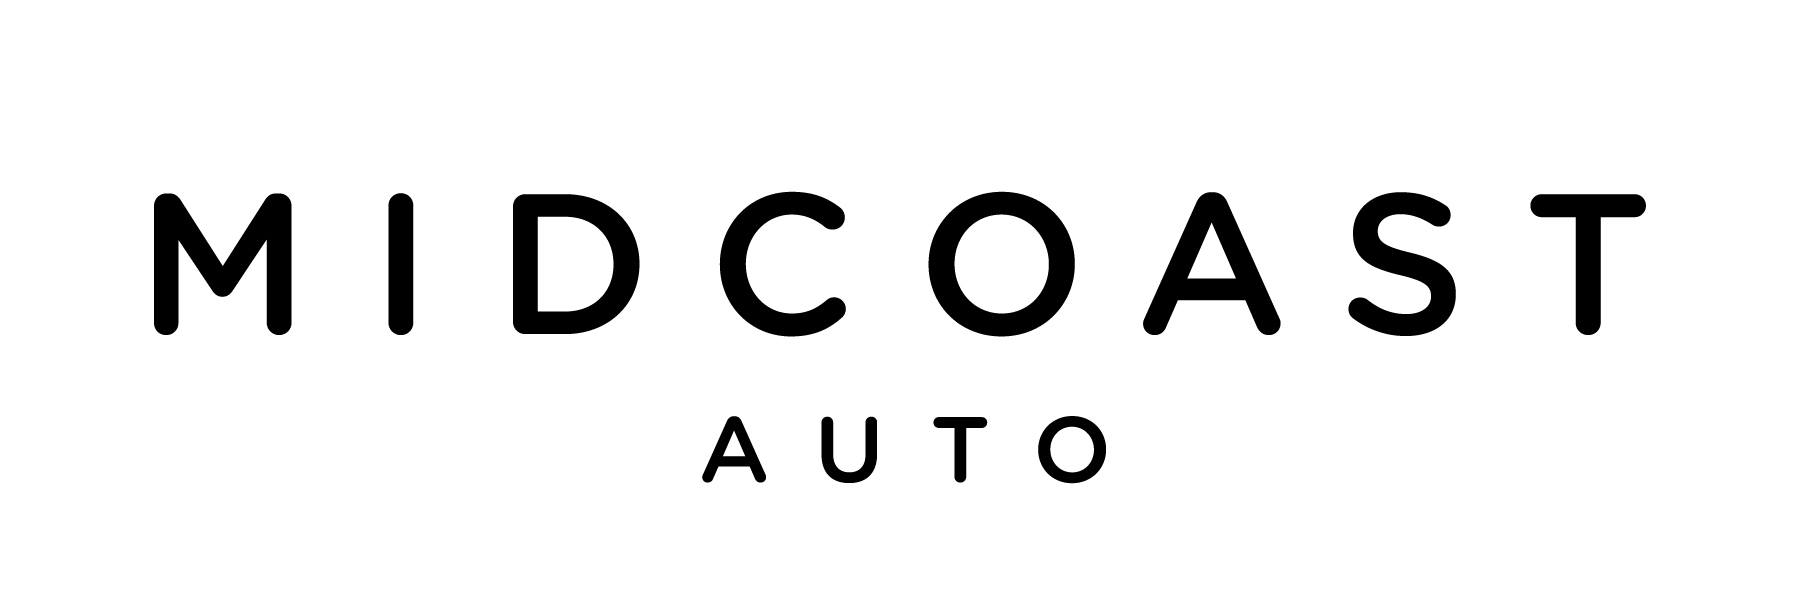 Midcoast Auto LLC Logo